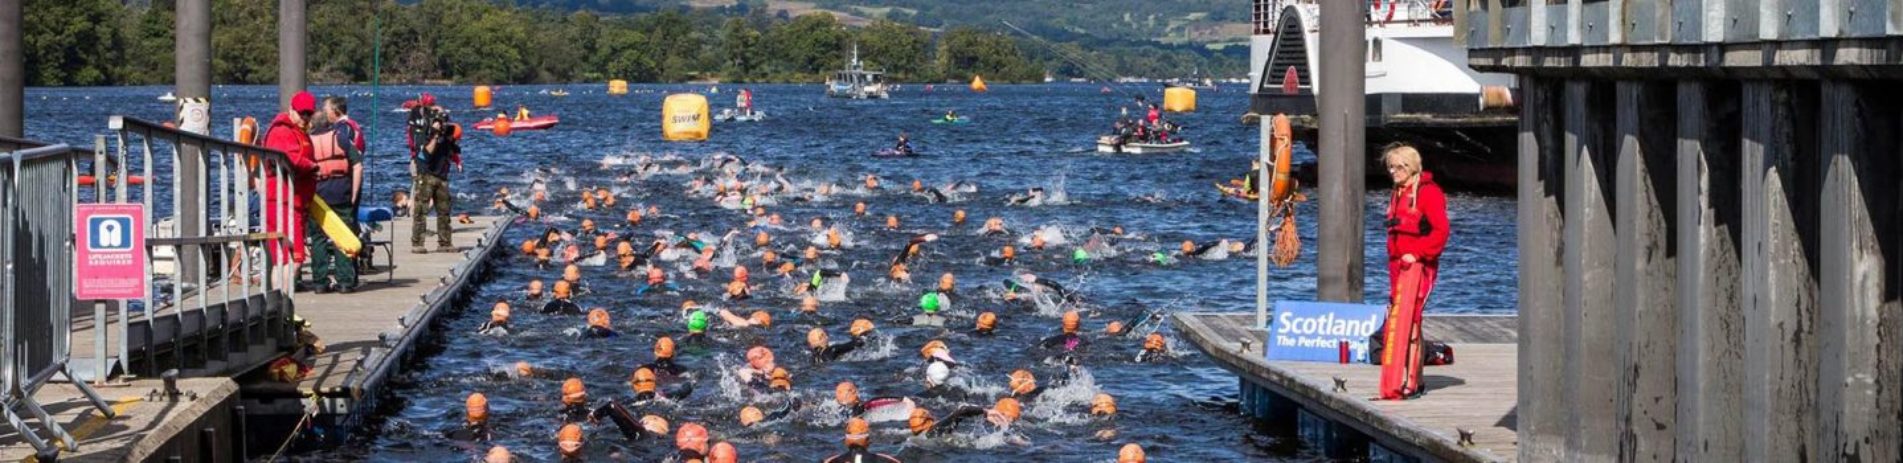 great-scottish-swim-event-seen-from-balloch-slipway-dozens-of-swimmers-with-green-and-orange-caps-swimming-vigorously